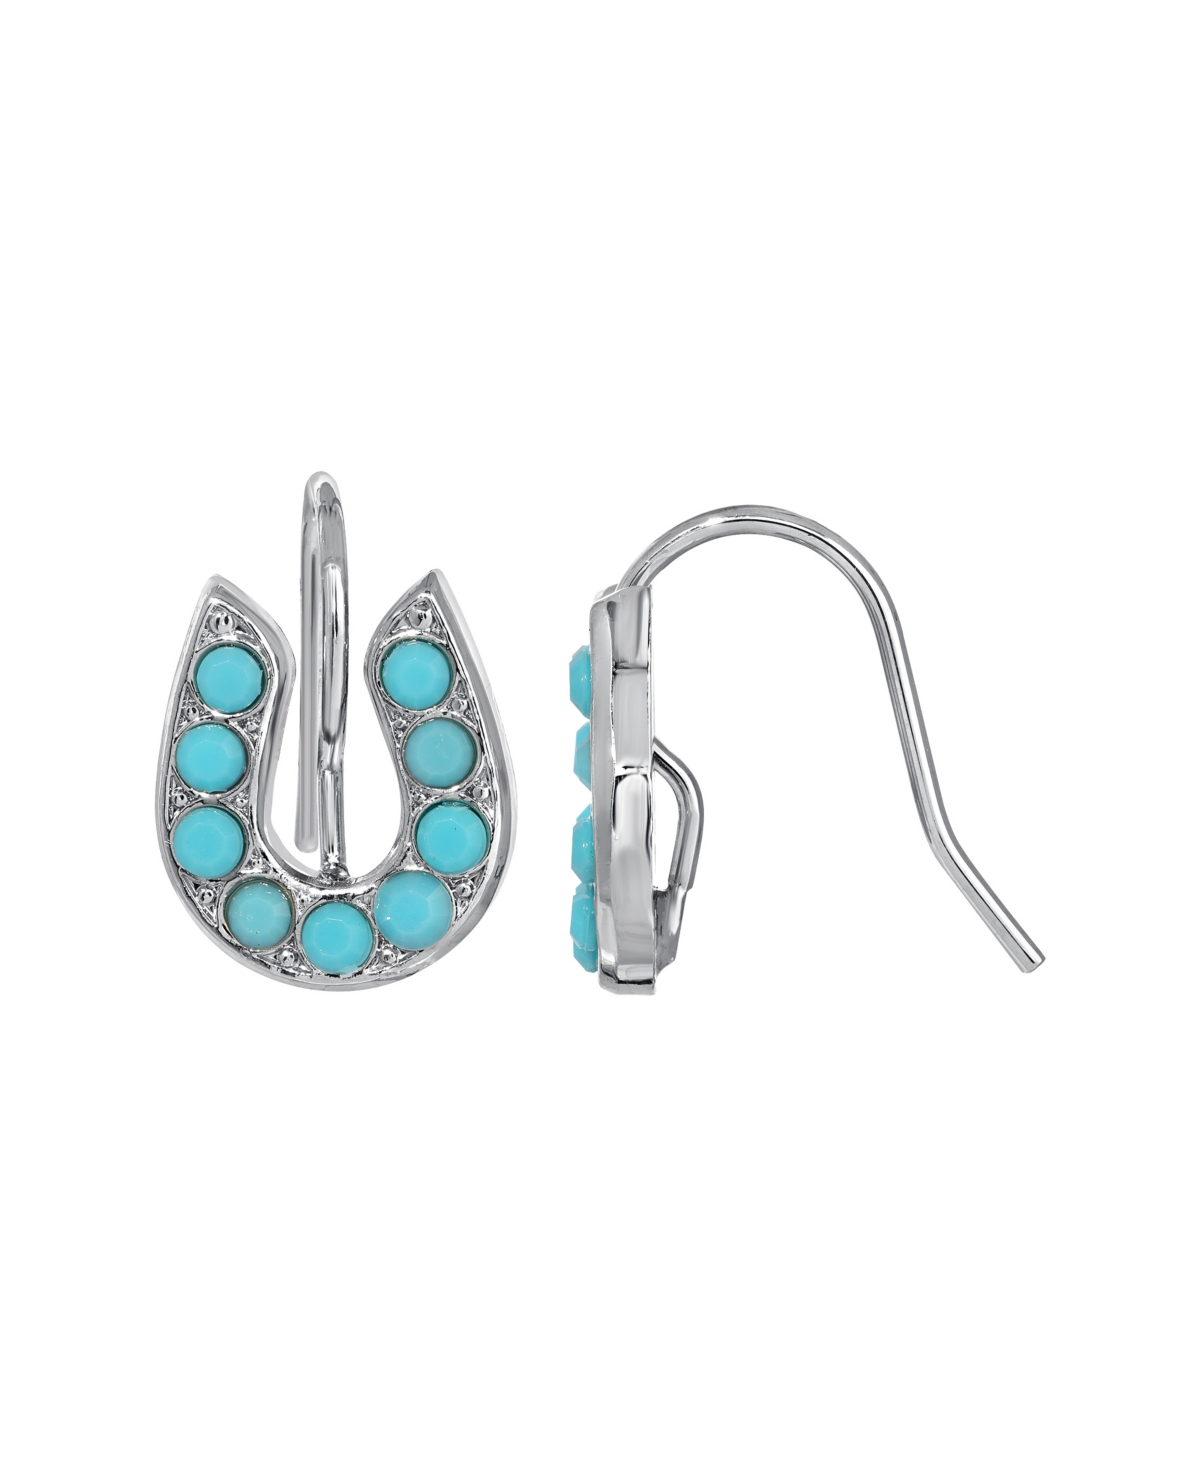 2028 Silver Tone Turquoise Horseshoe Wire Earrings